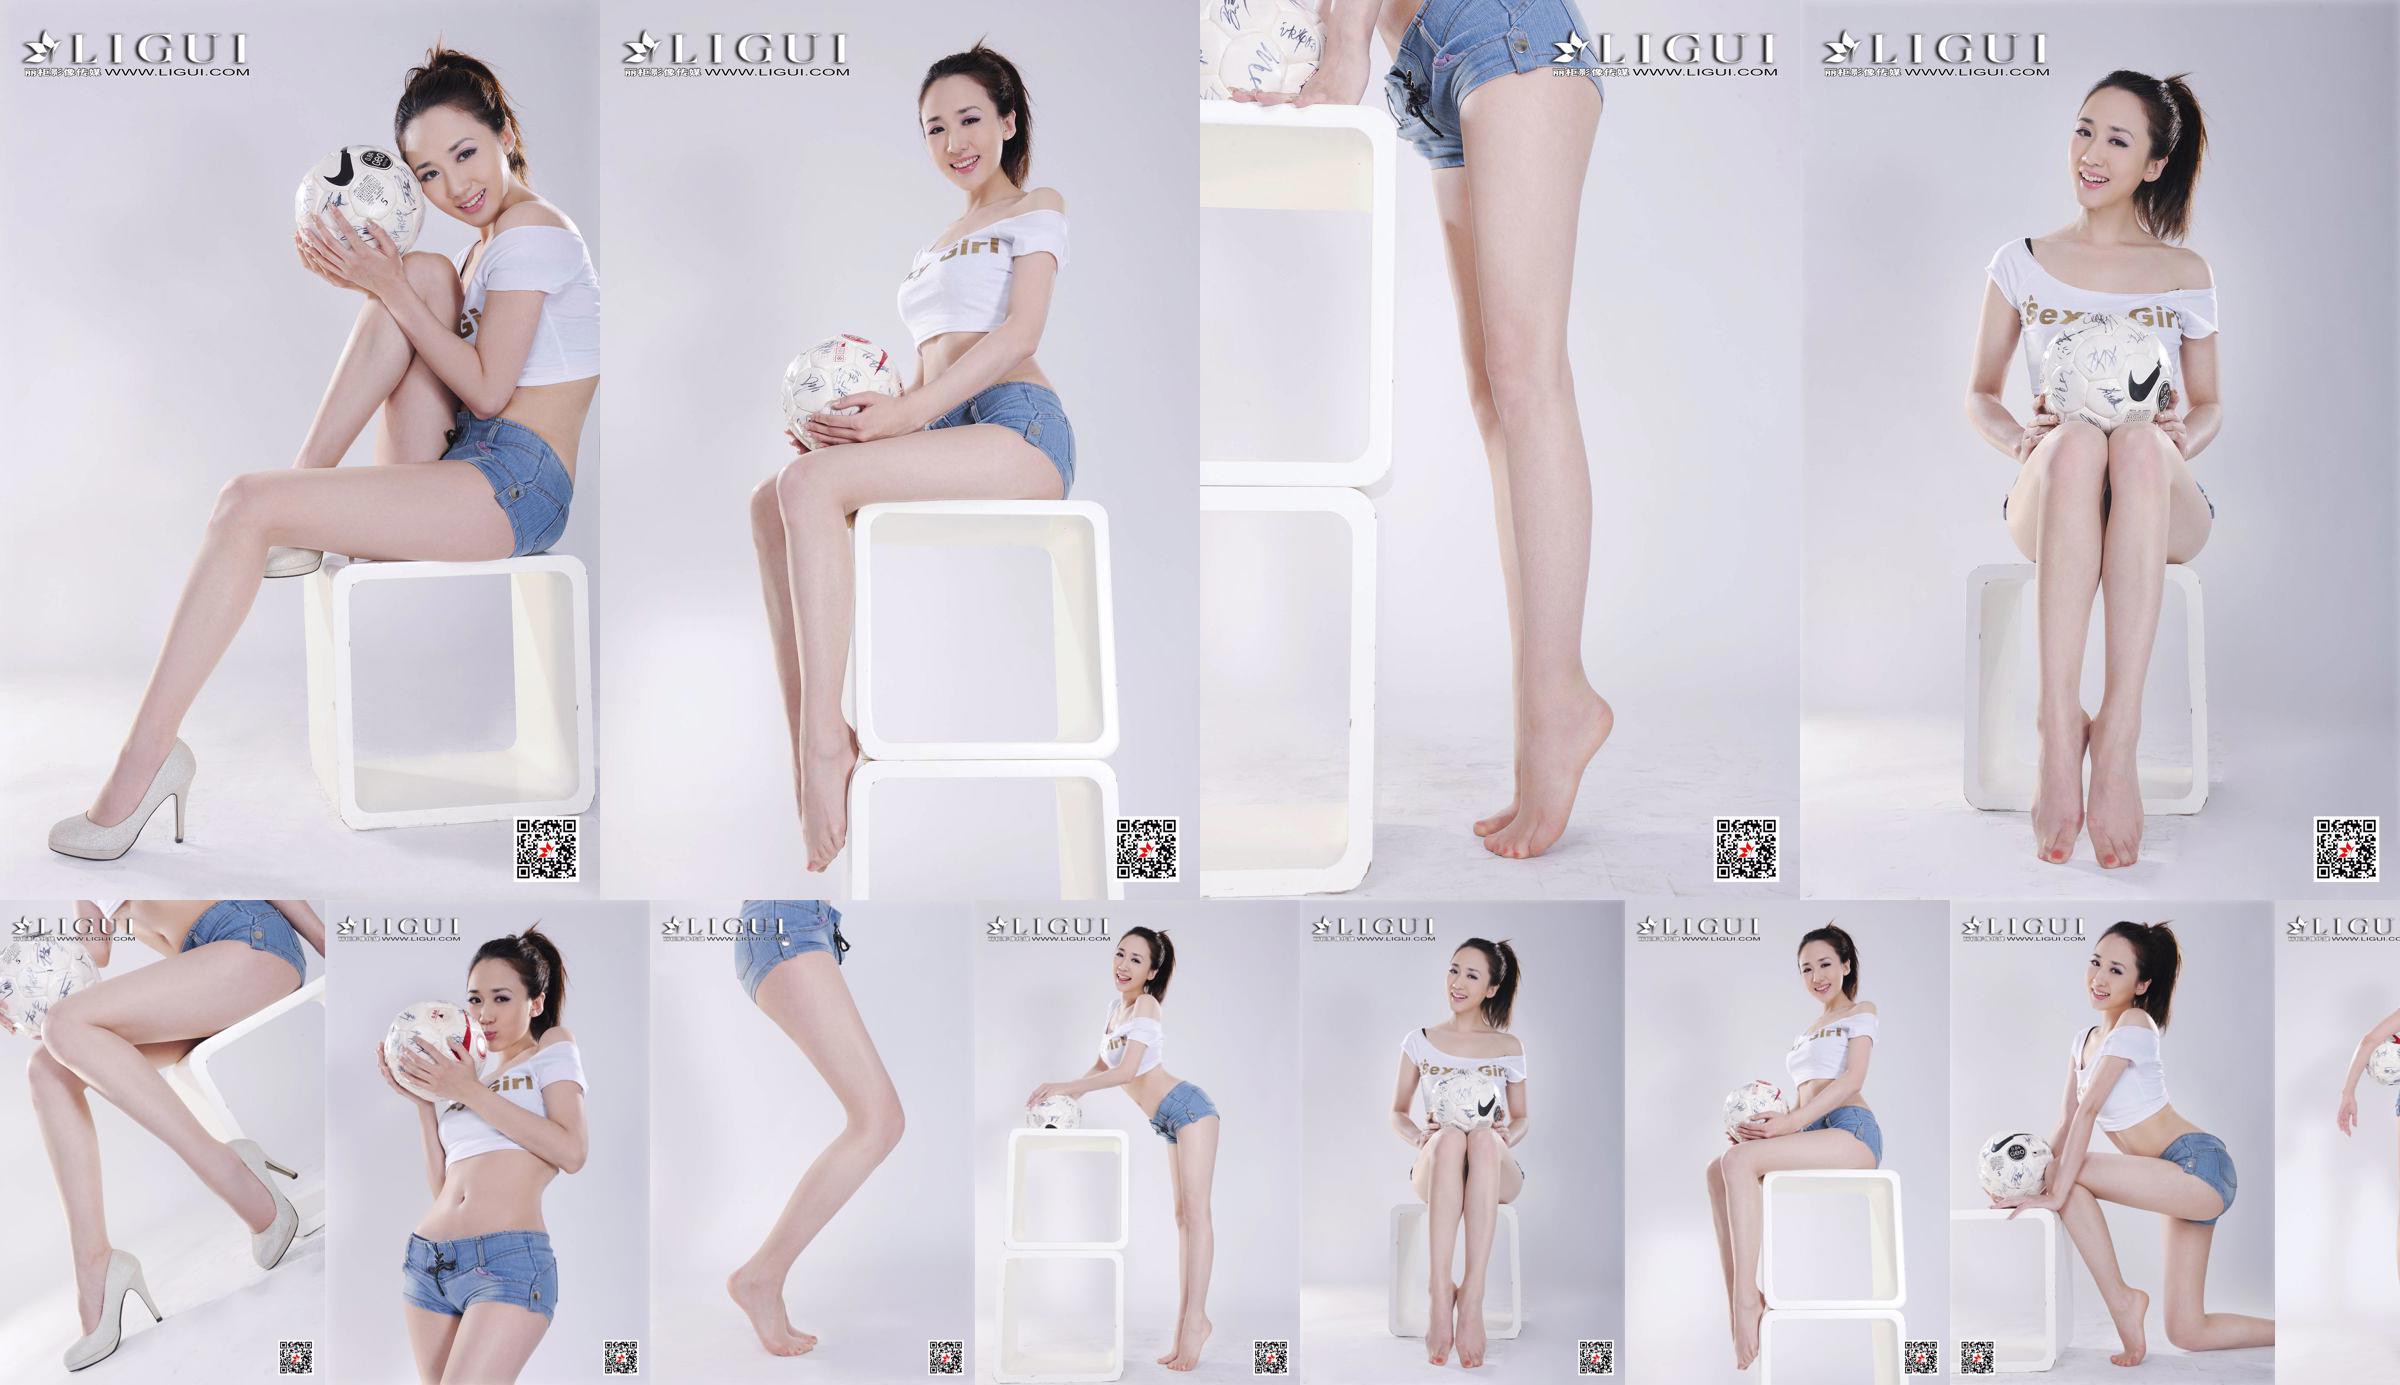 Model Qiu Chen "Gadis Sepak Bola Celana Super Pendek" [LIGUI] No.0ed43a Halaman 1